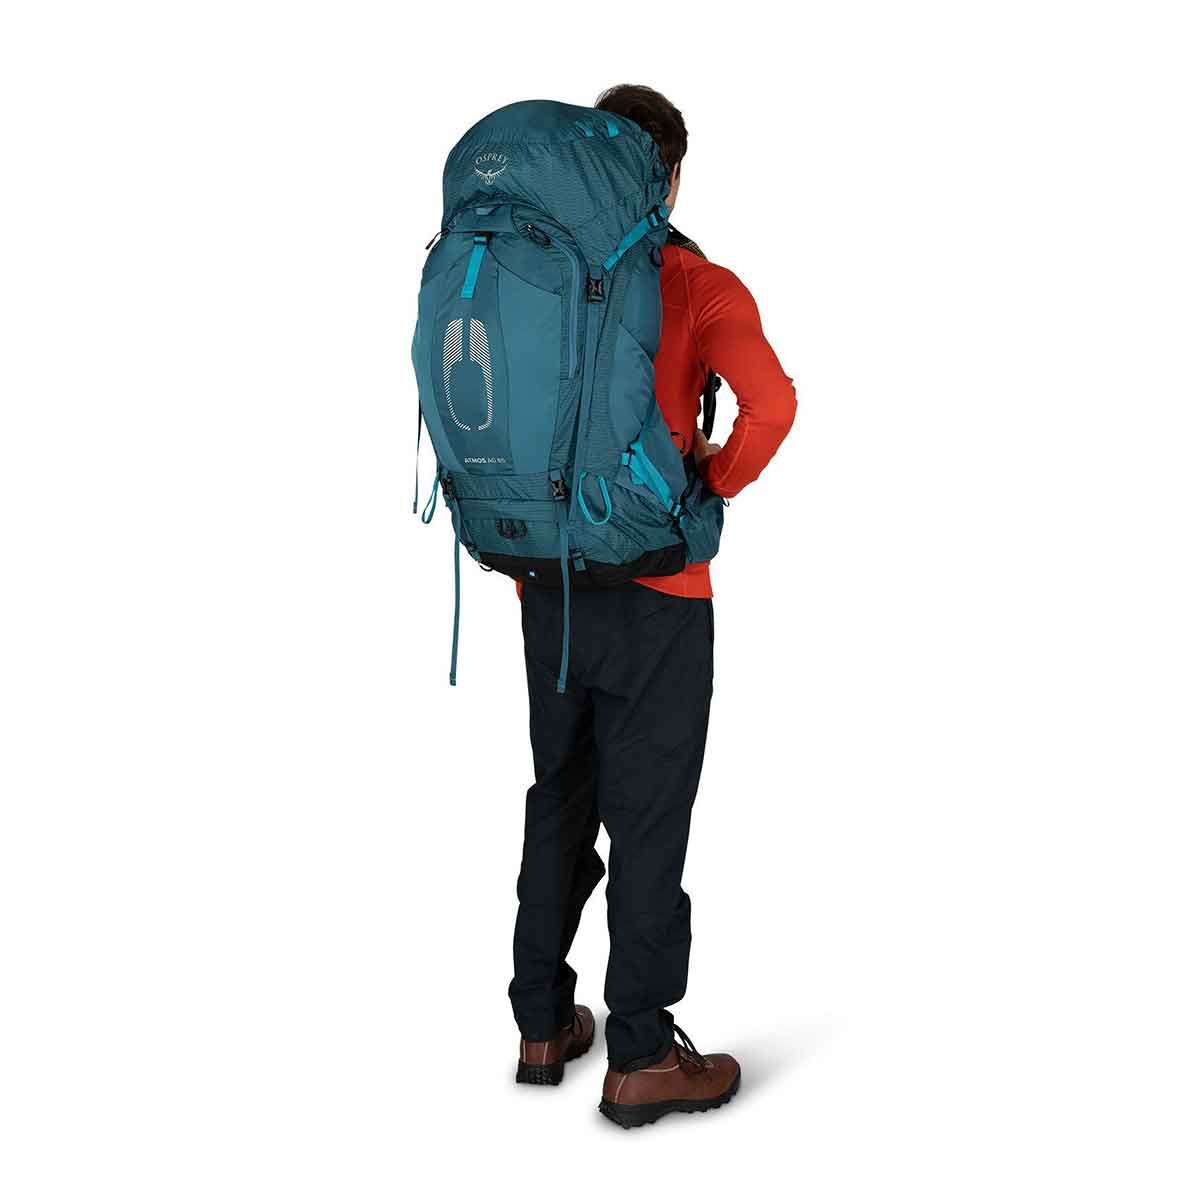 Osprey Atmos AG 65 backpacking backpack - Men